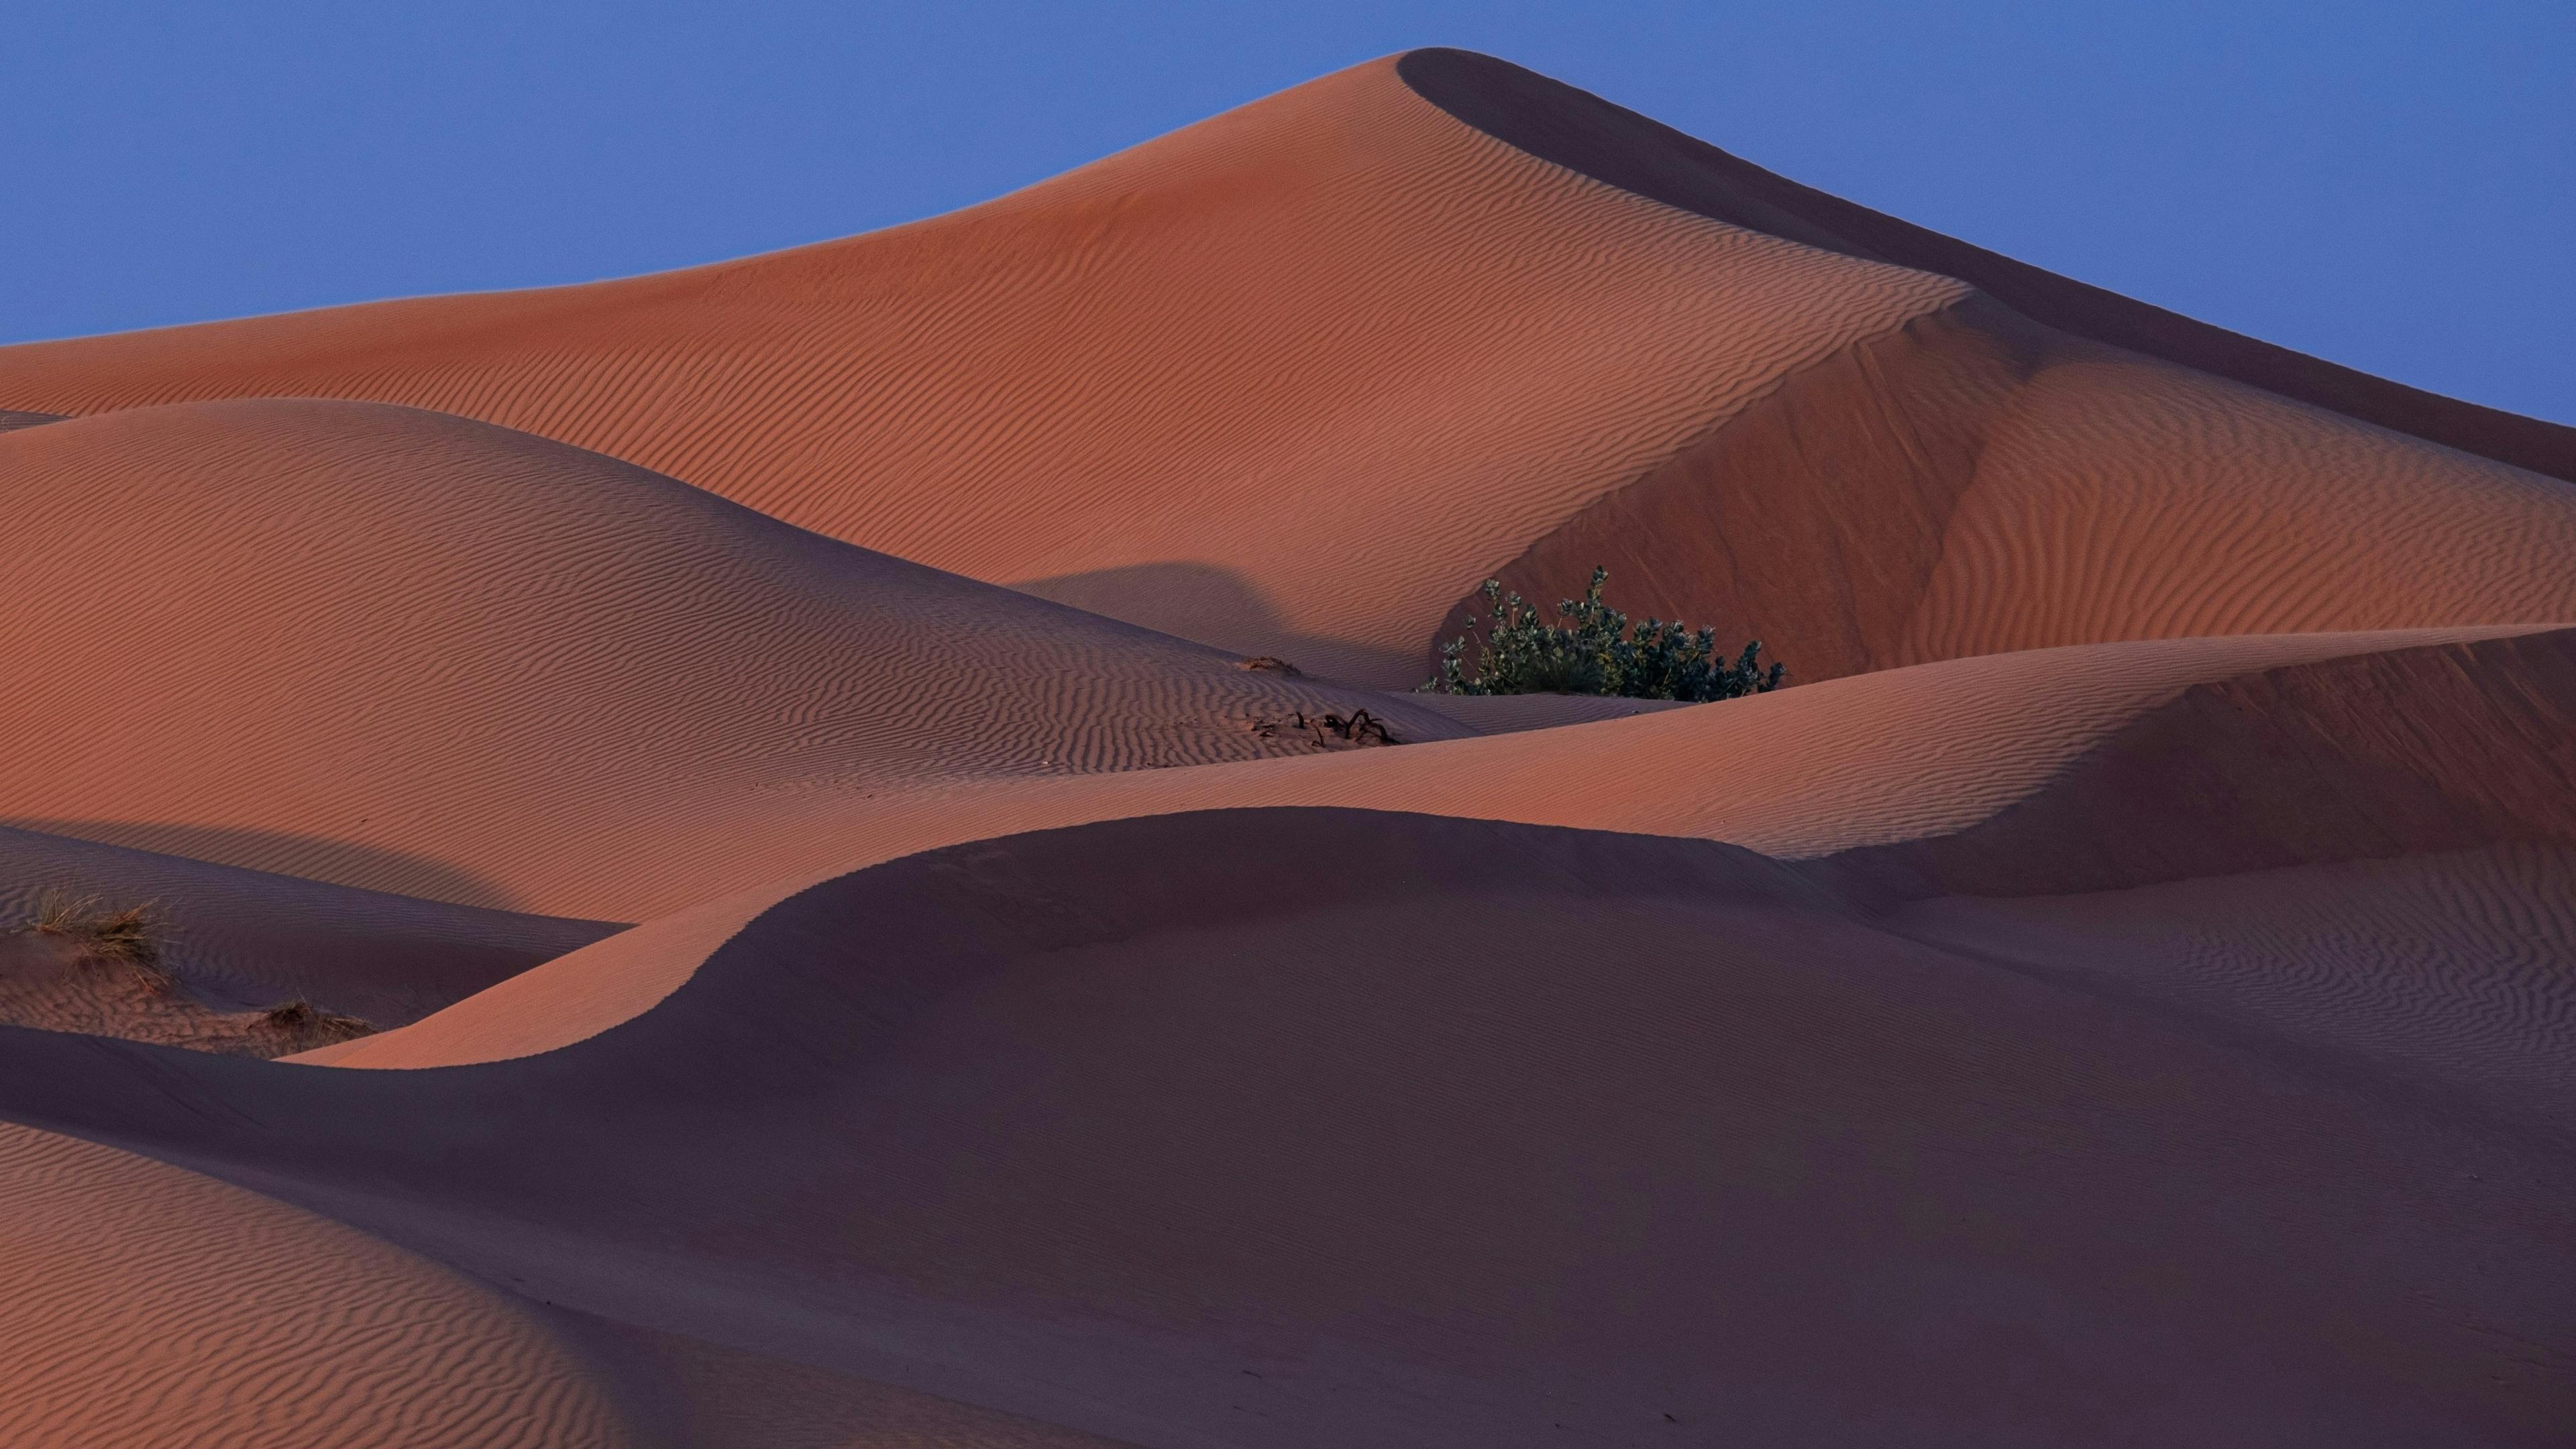 Sand dunes in the desert against a bright blue sky